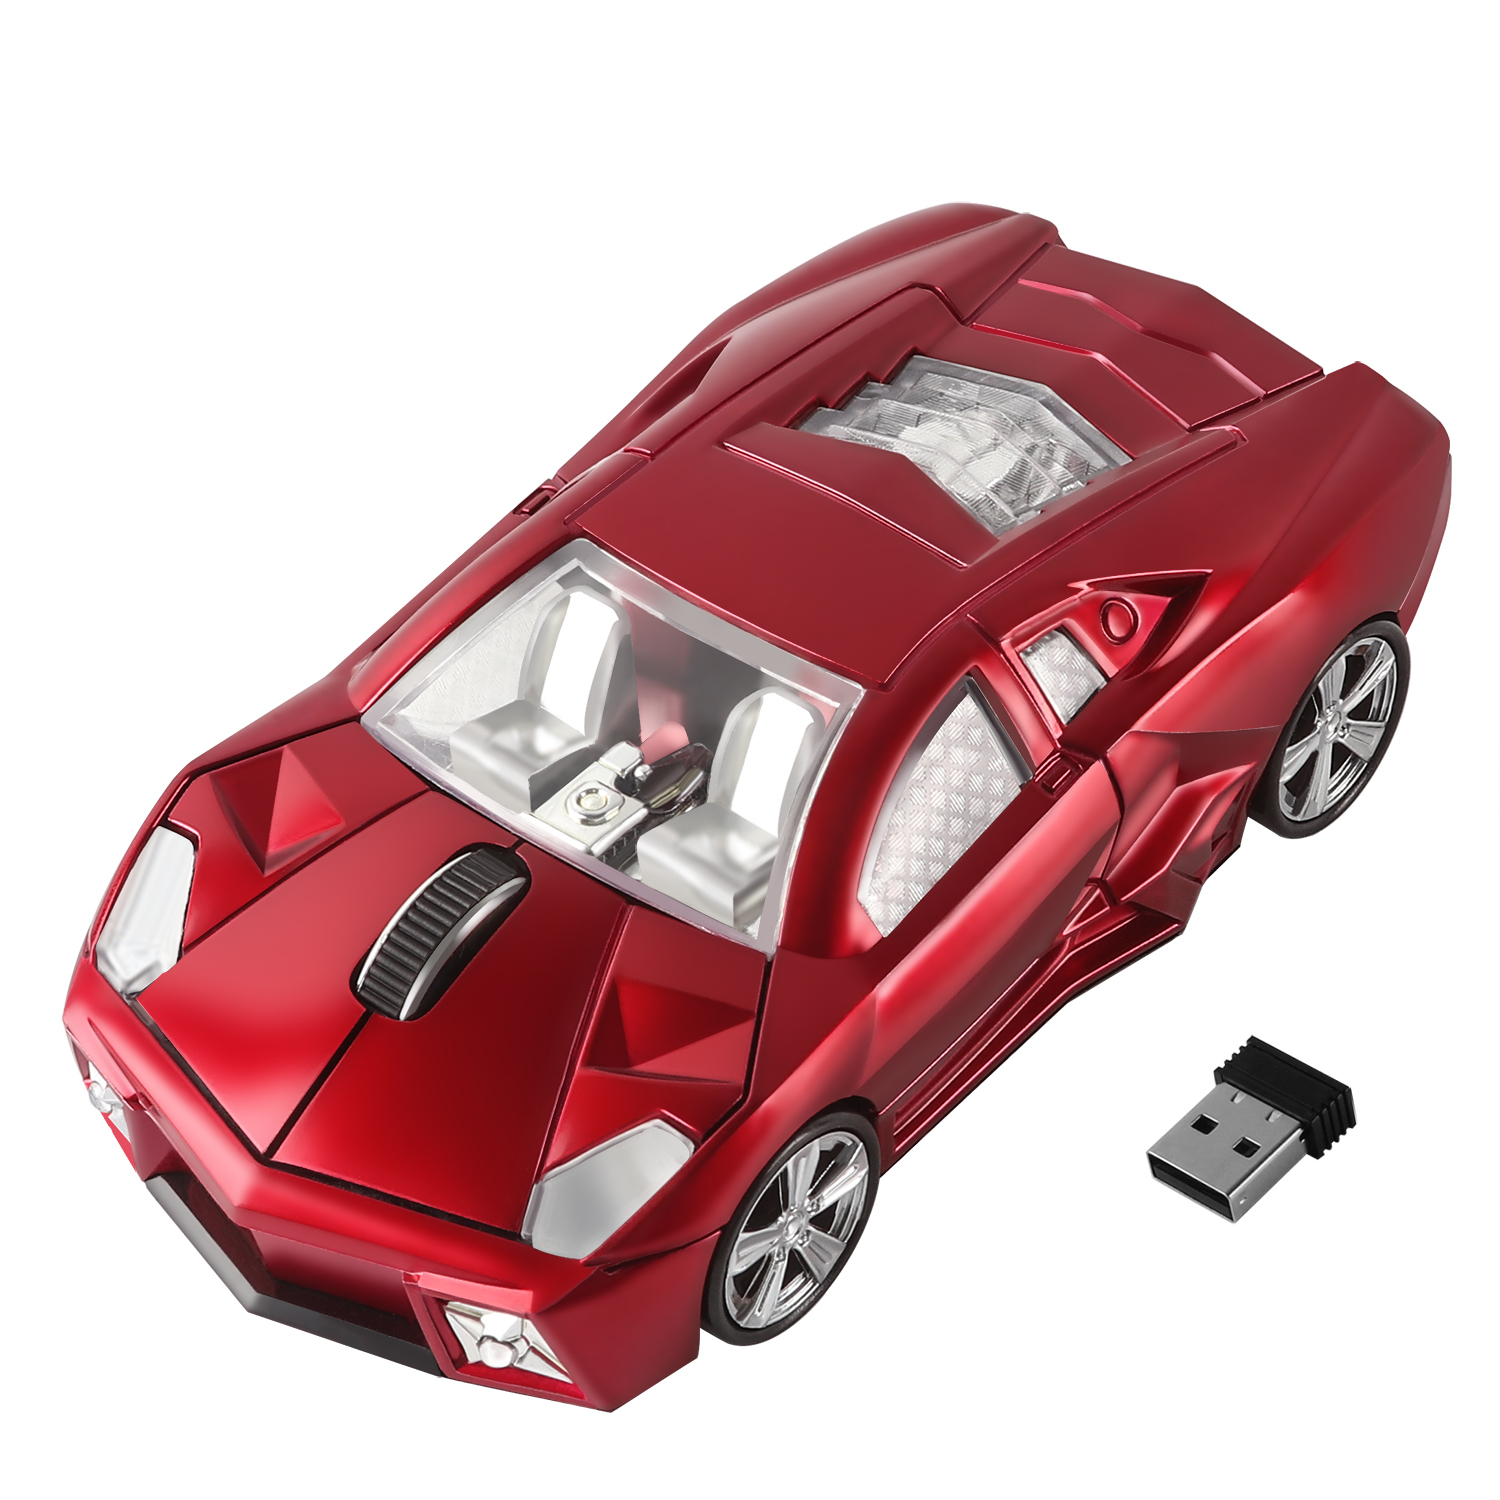 2-4G-Wireless-Mouse-Ergonomic-Sports-Car-Design-Gaming-Mause-1600-DPI-USB-Optical-Kids-Regalo (11)